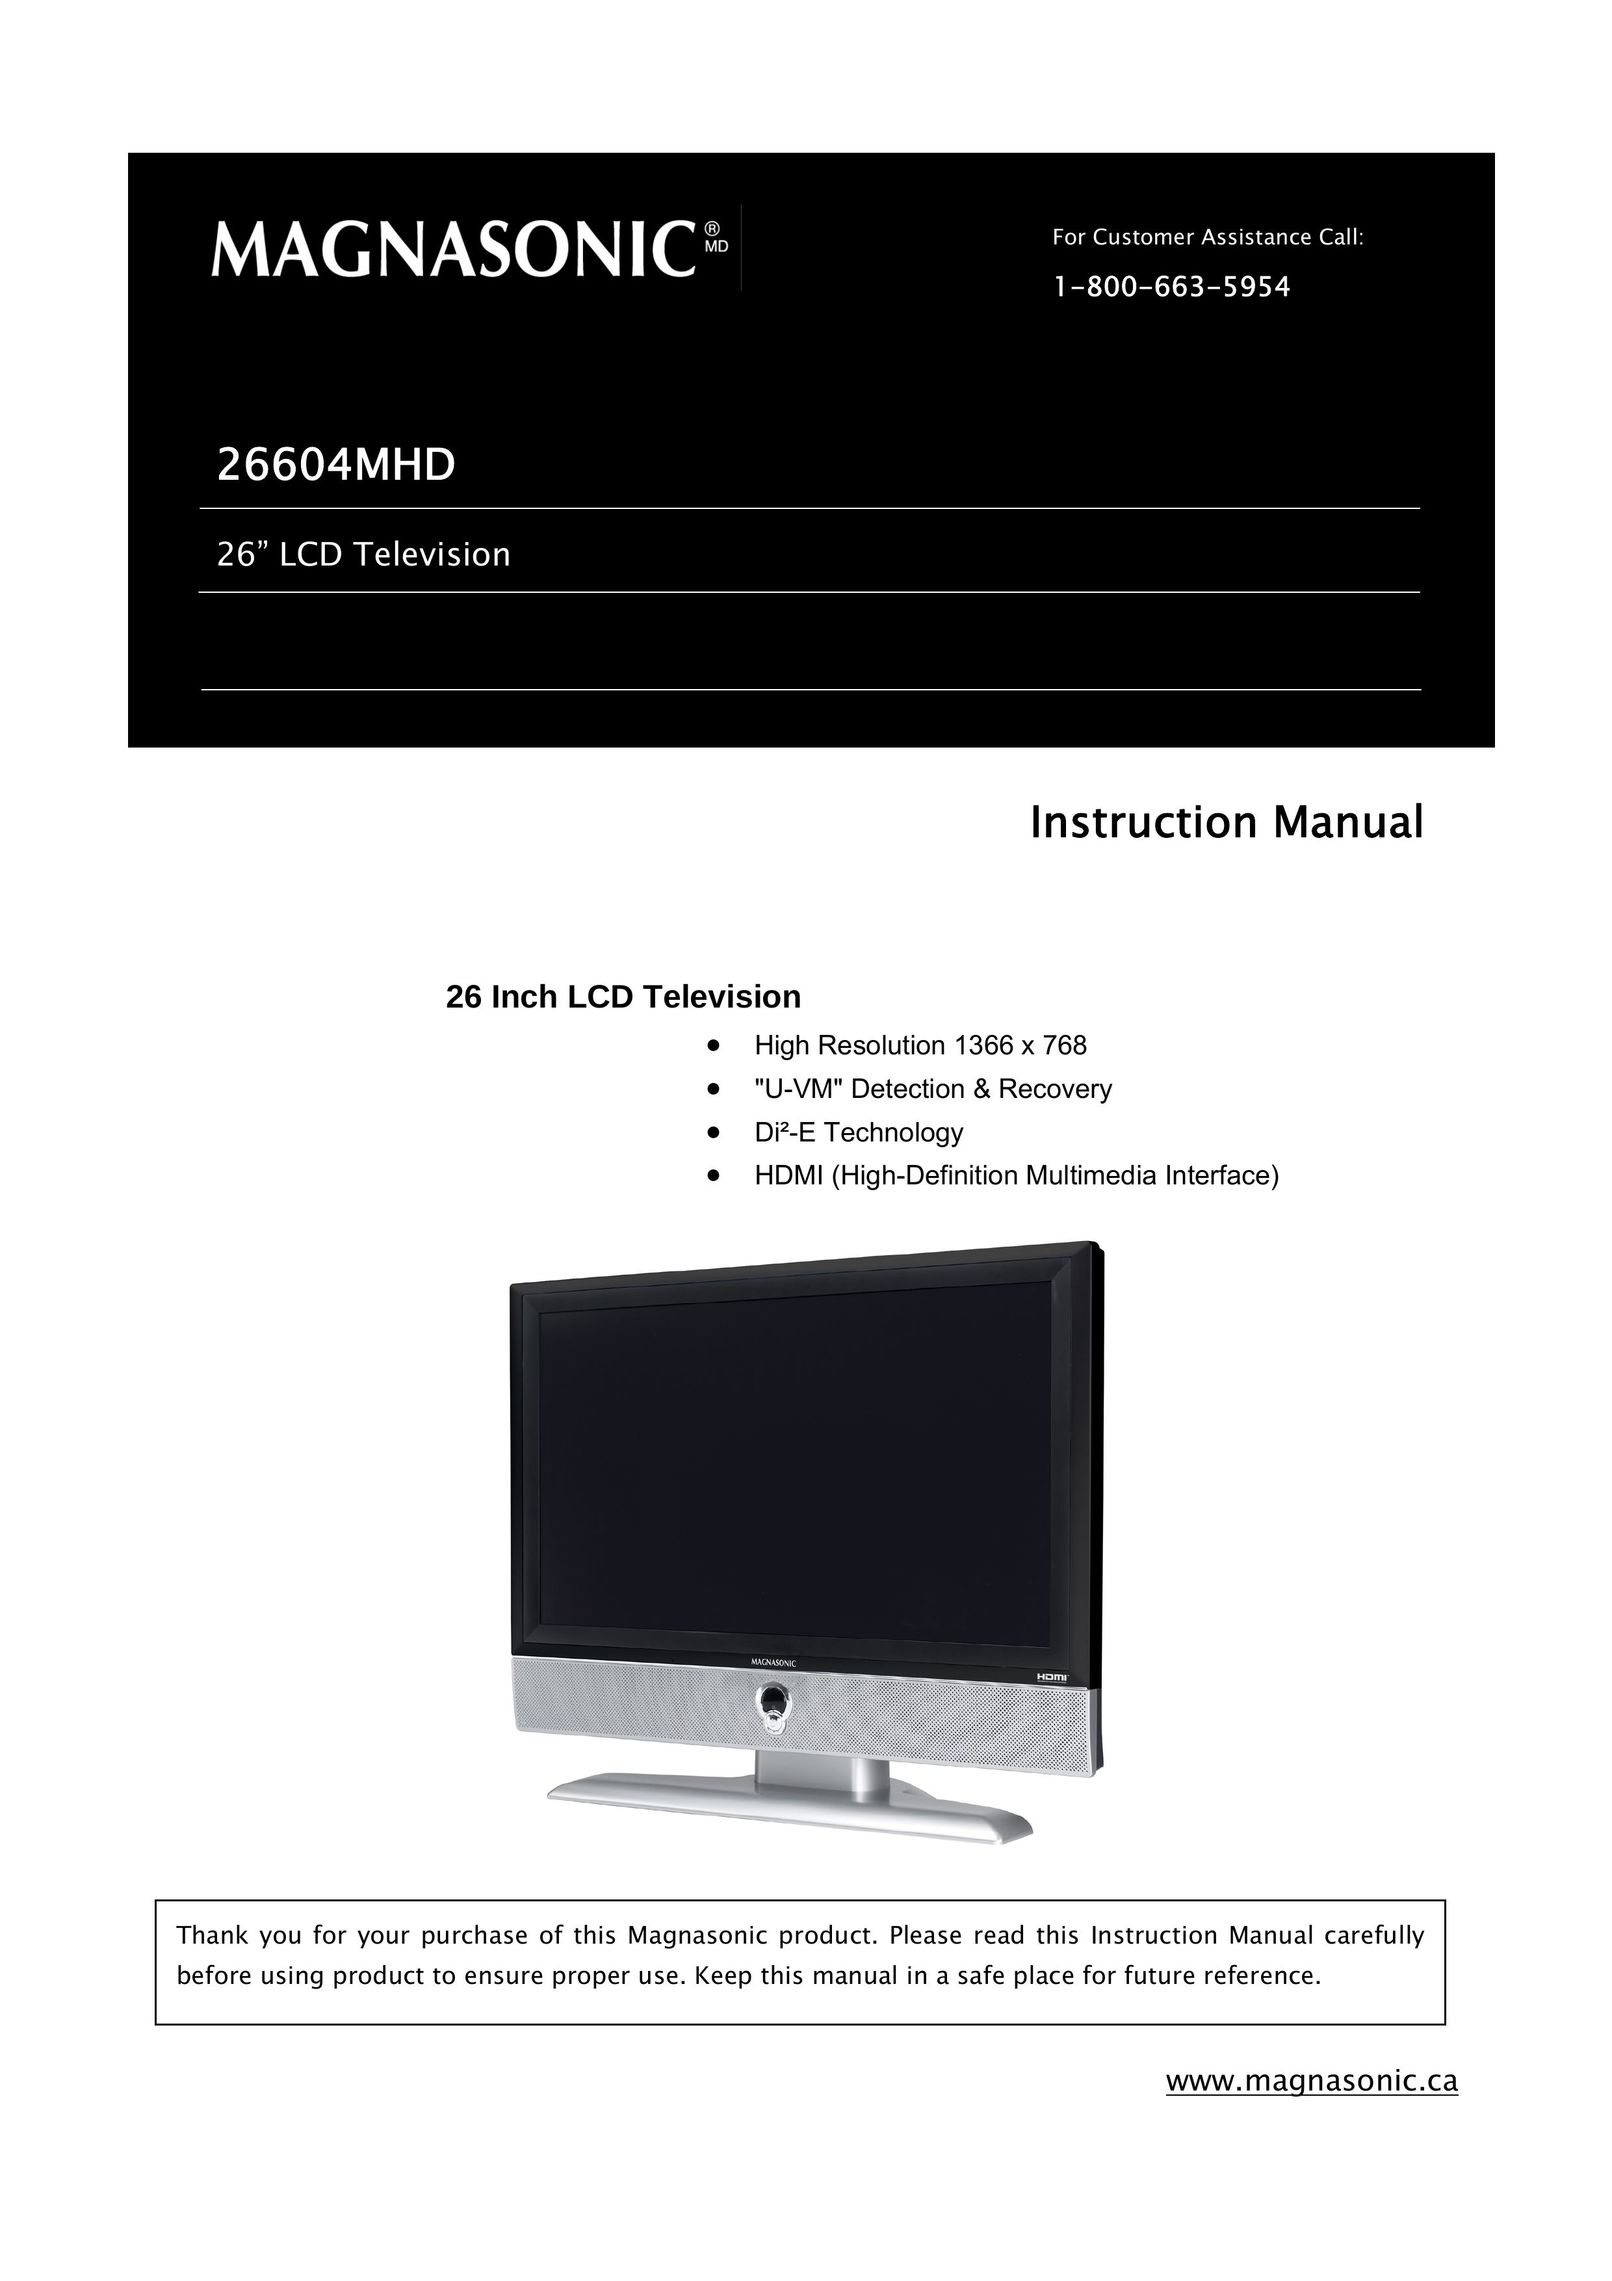 Magnasonic 26604MHD Flat Panel Television User Manual